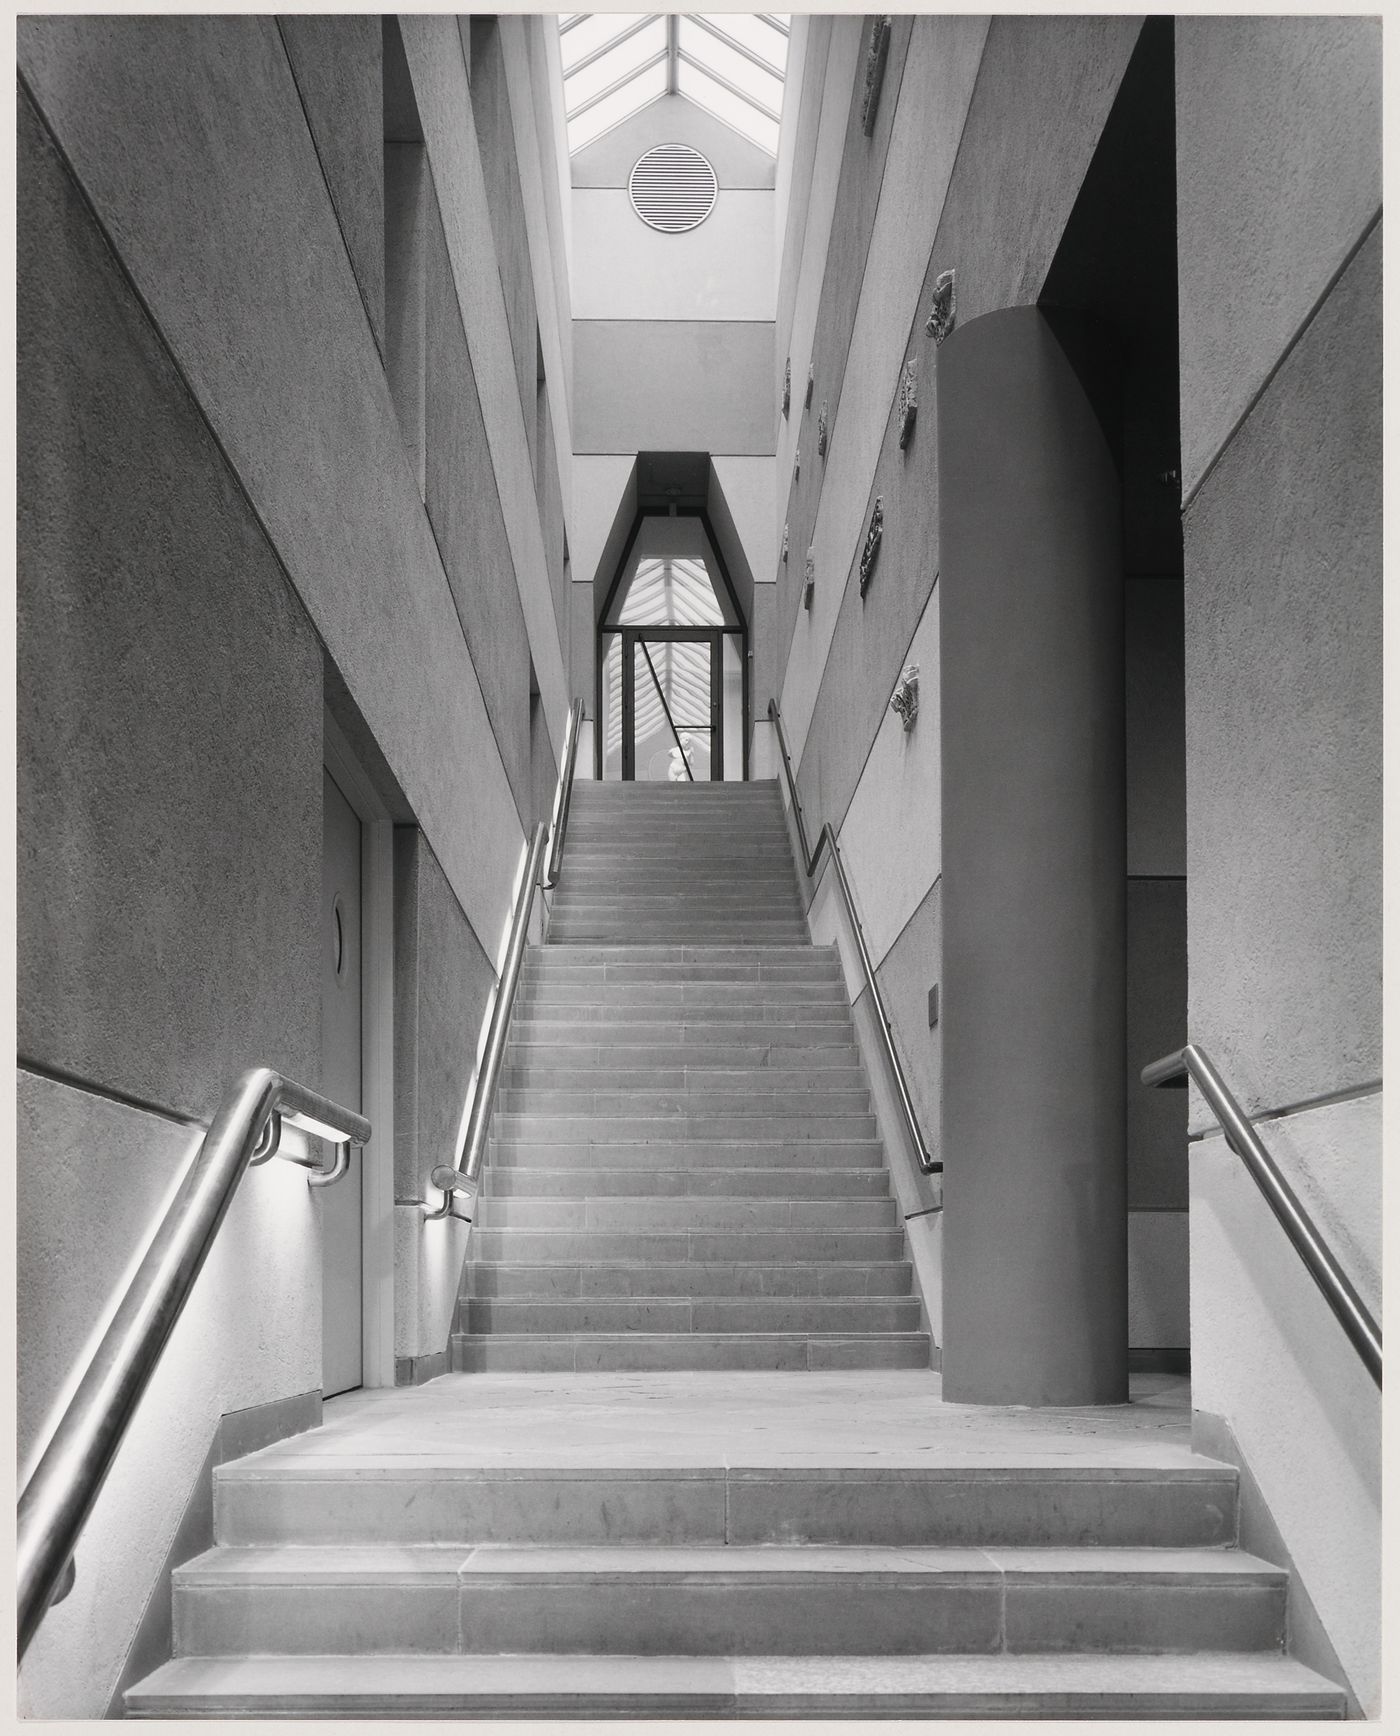 Arthur M. Sackler Museum, Harvard University, Cambridge, Massachusetts: view of interior staircase